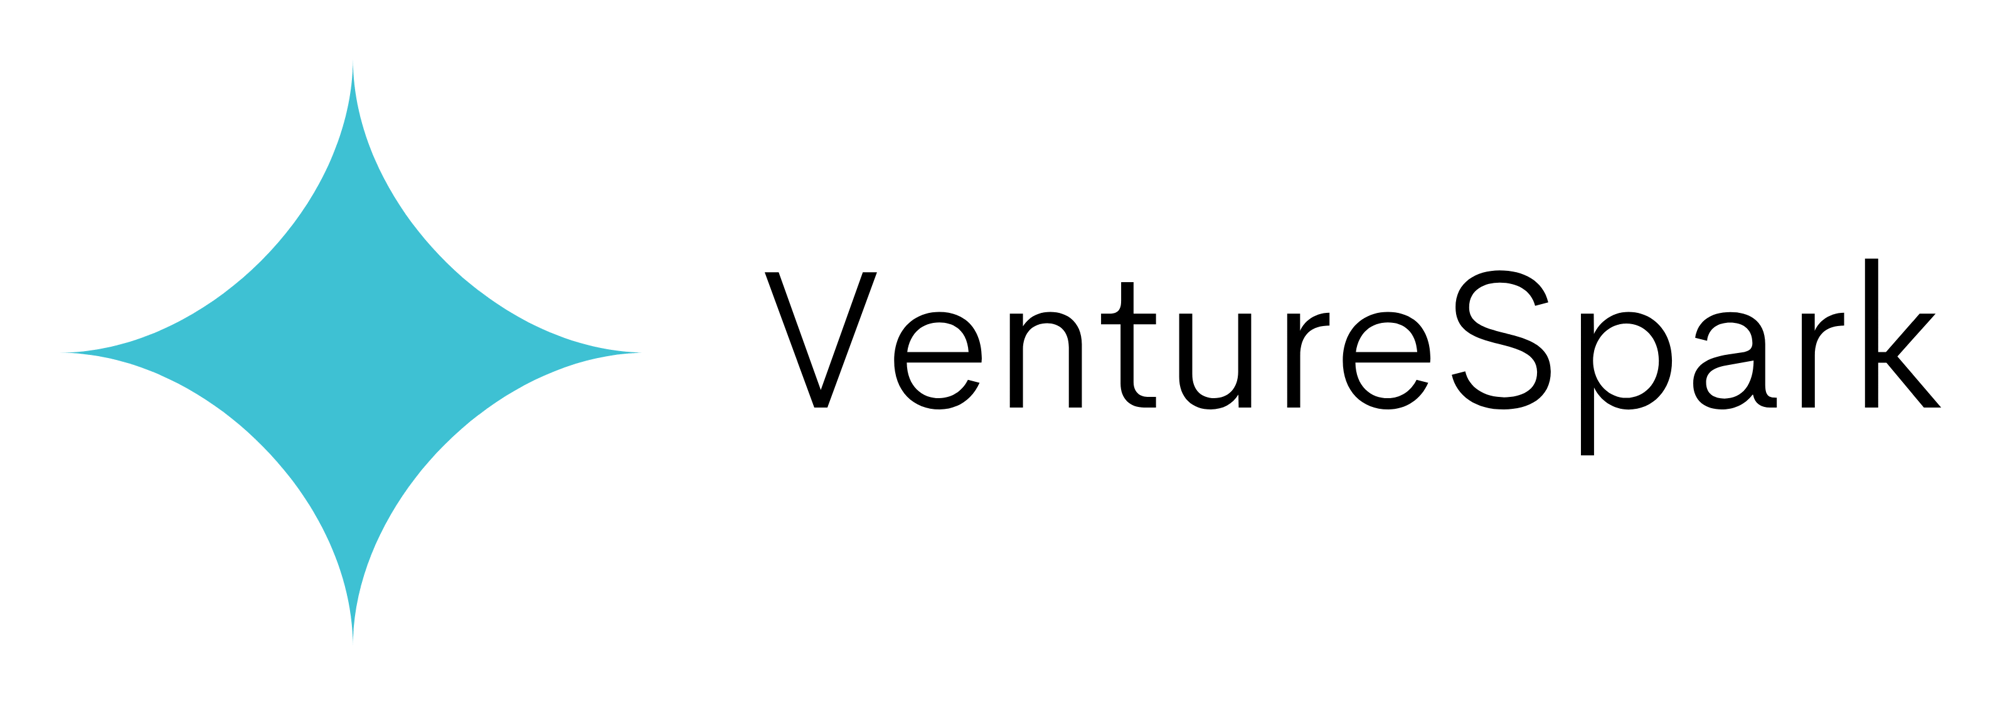 Color logo with background VentureSpark